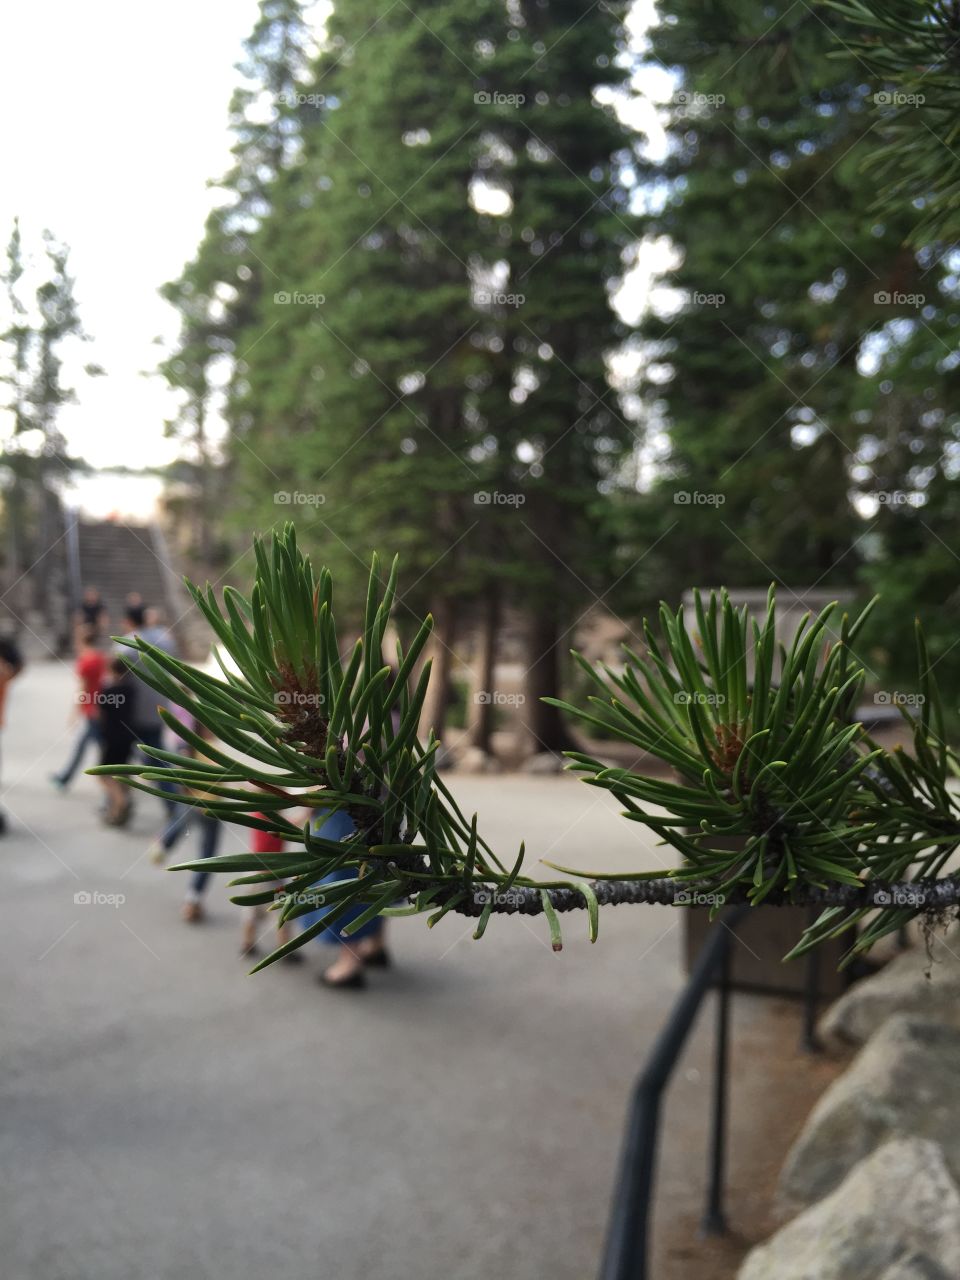 Pine perspective 